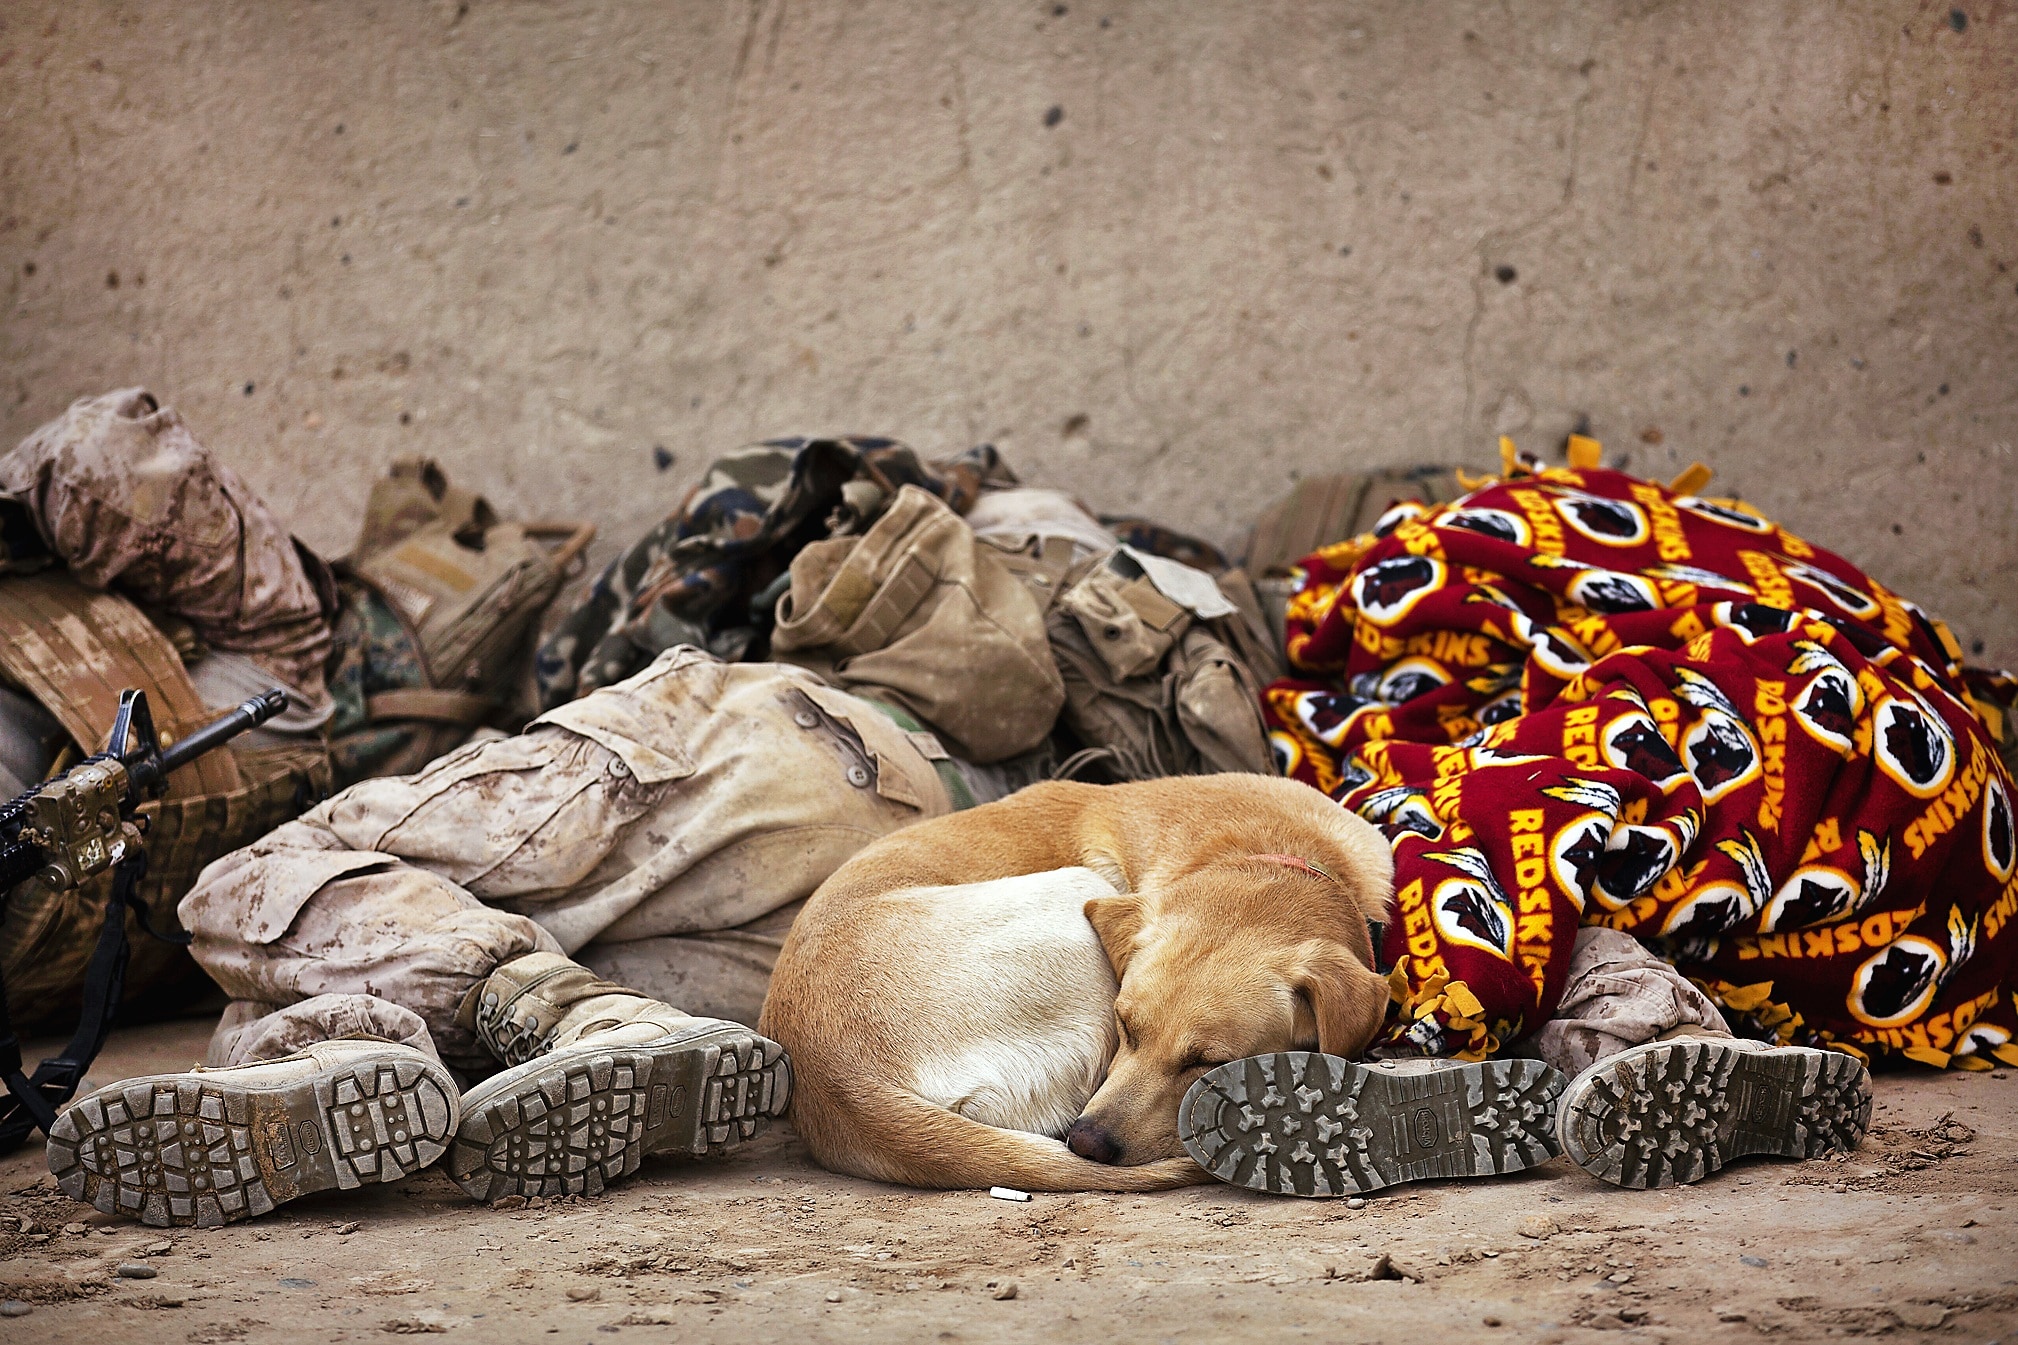 yellow Labrador Retriever sleeping beside people